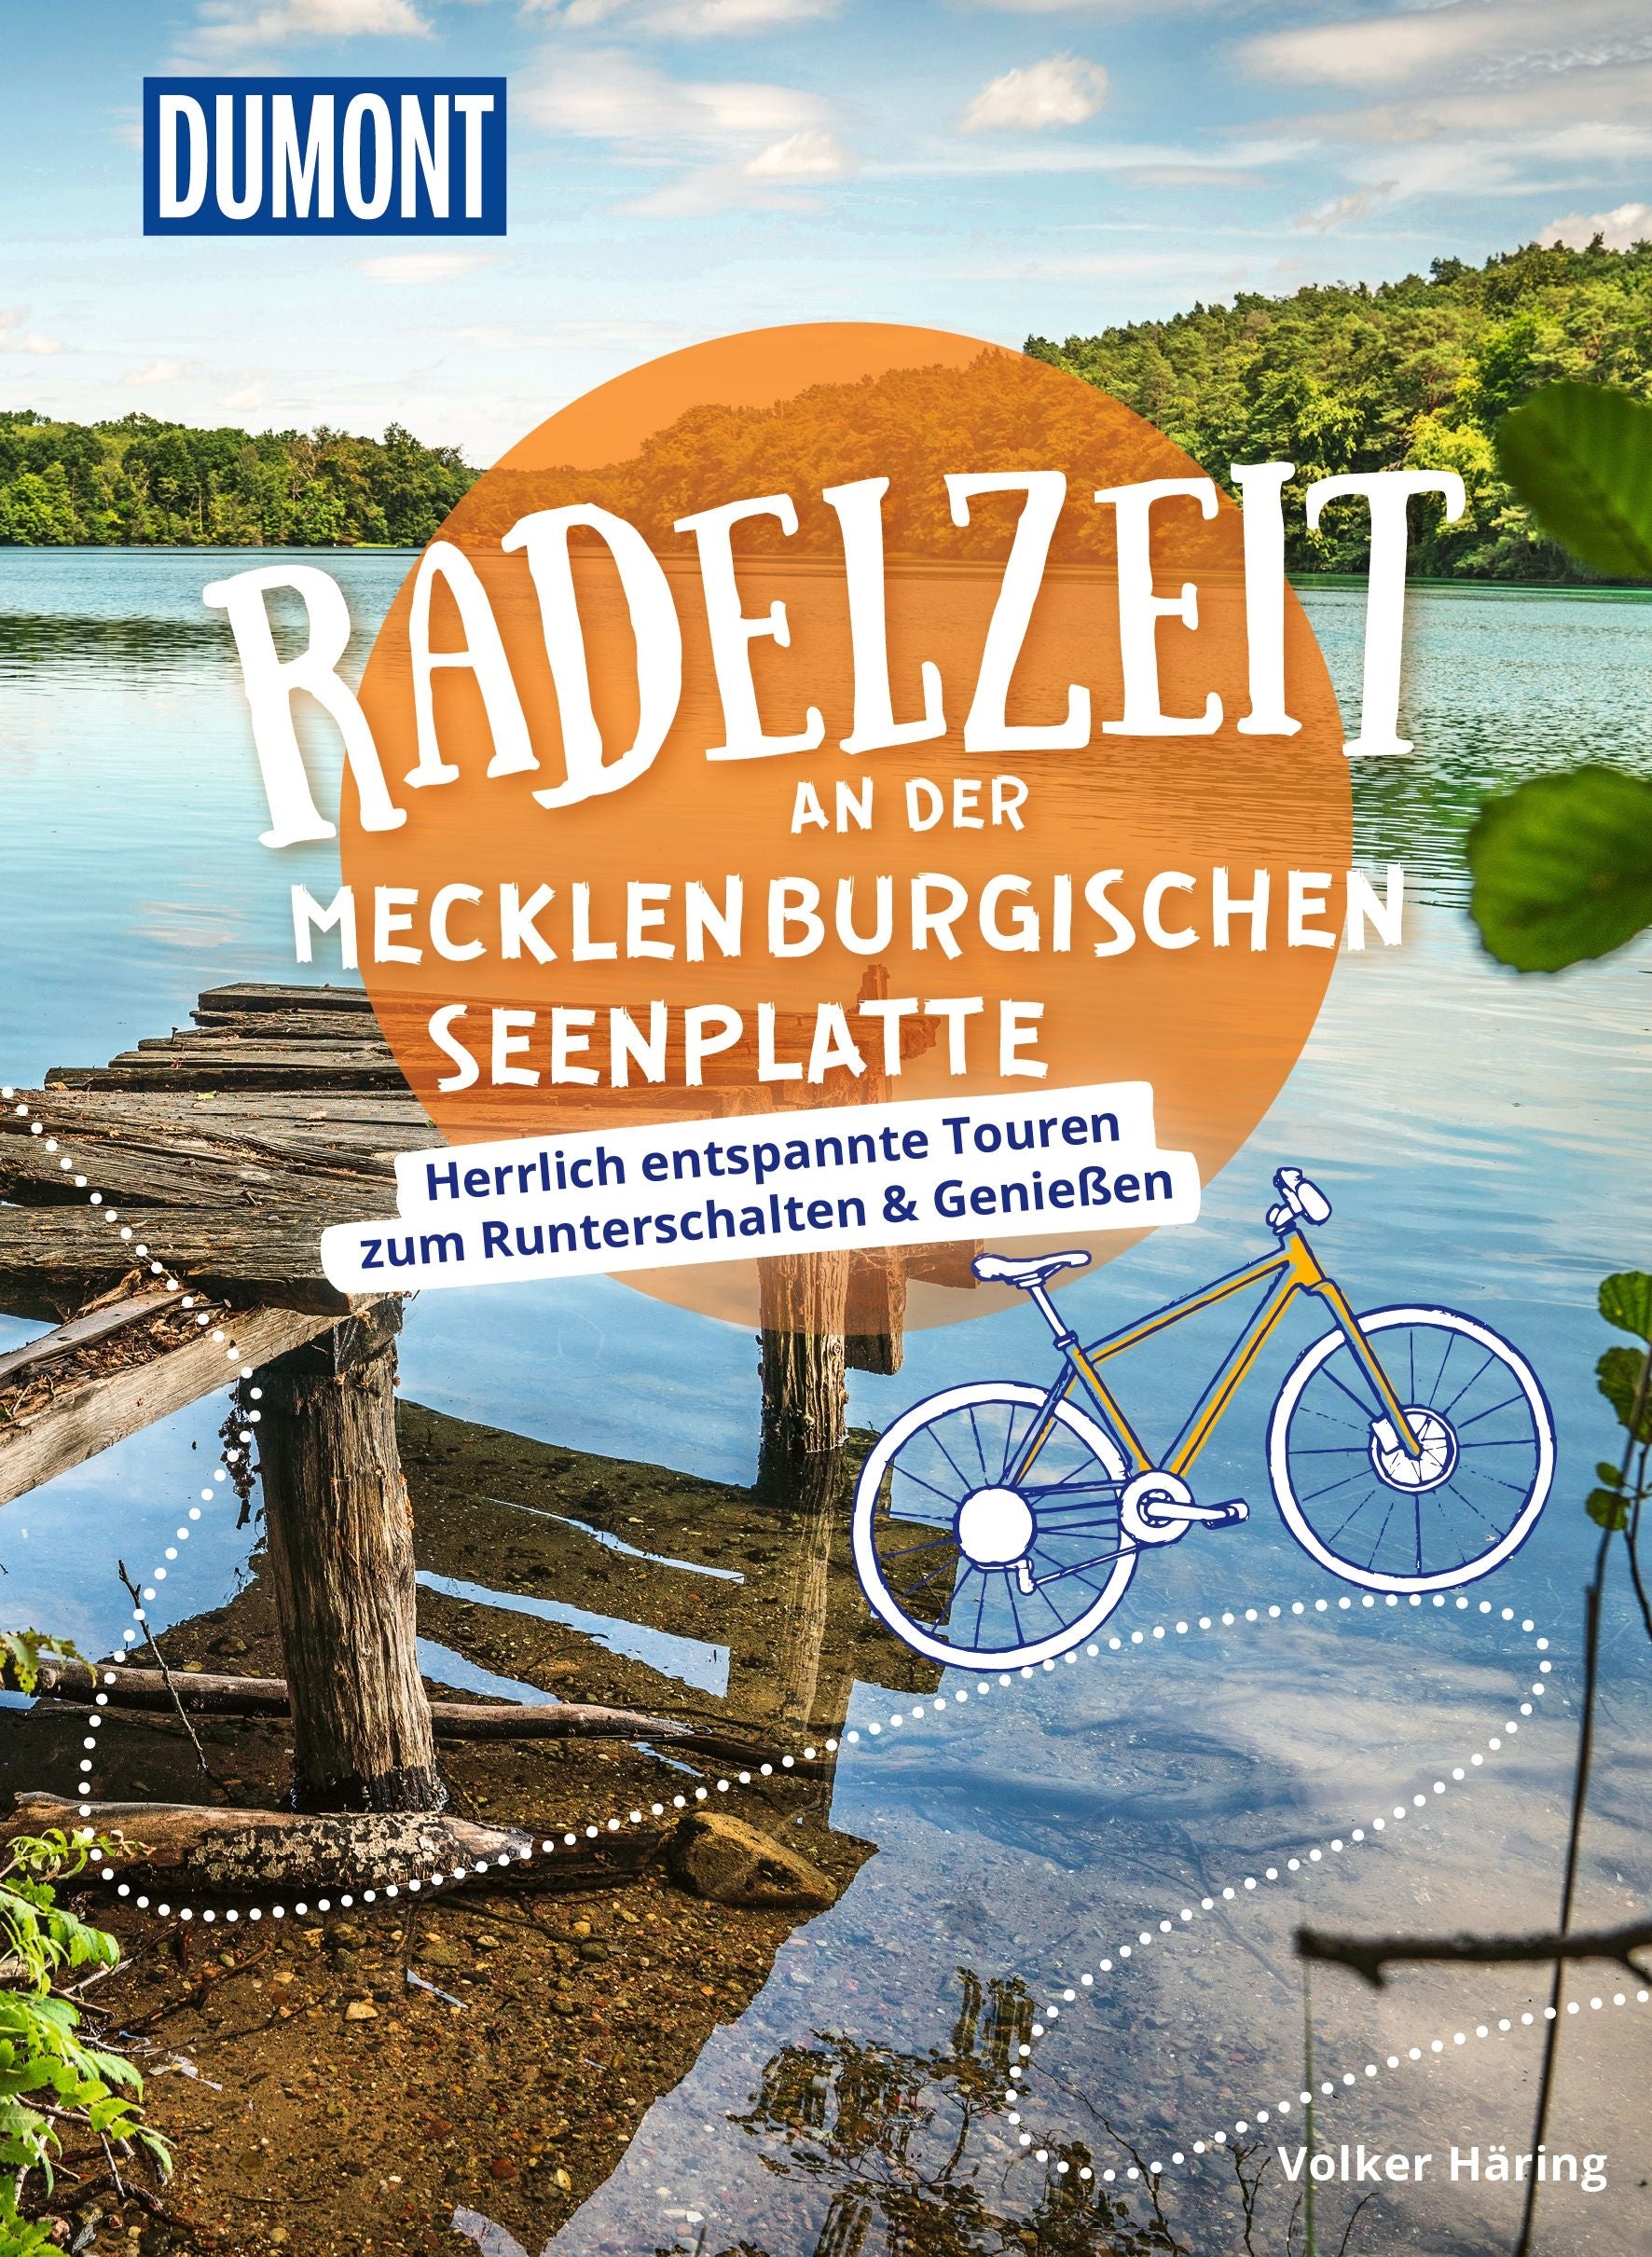 Mecklenburgische Seenplatte  - Radelzeit